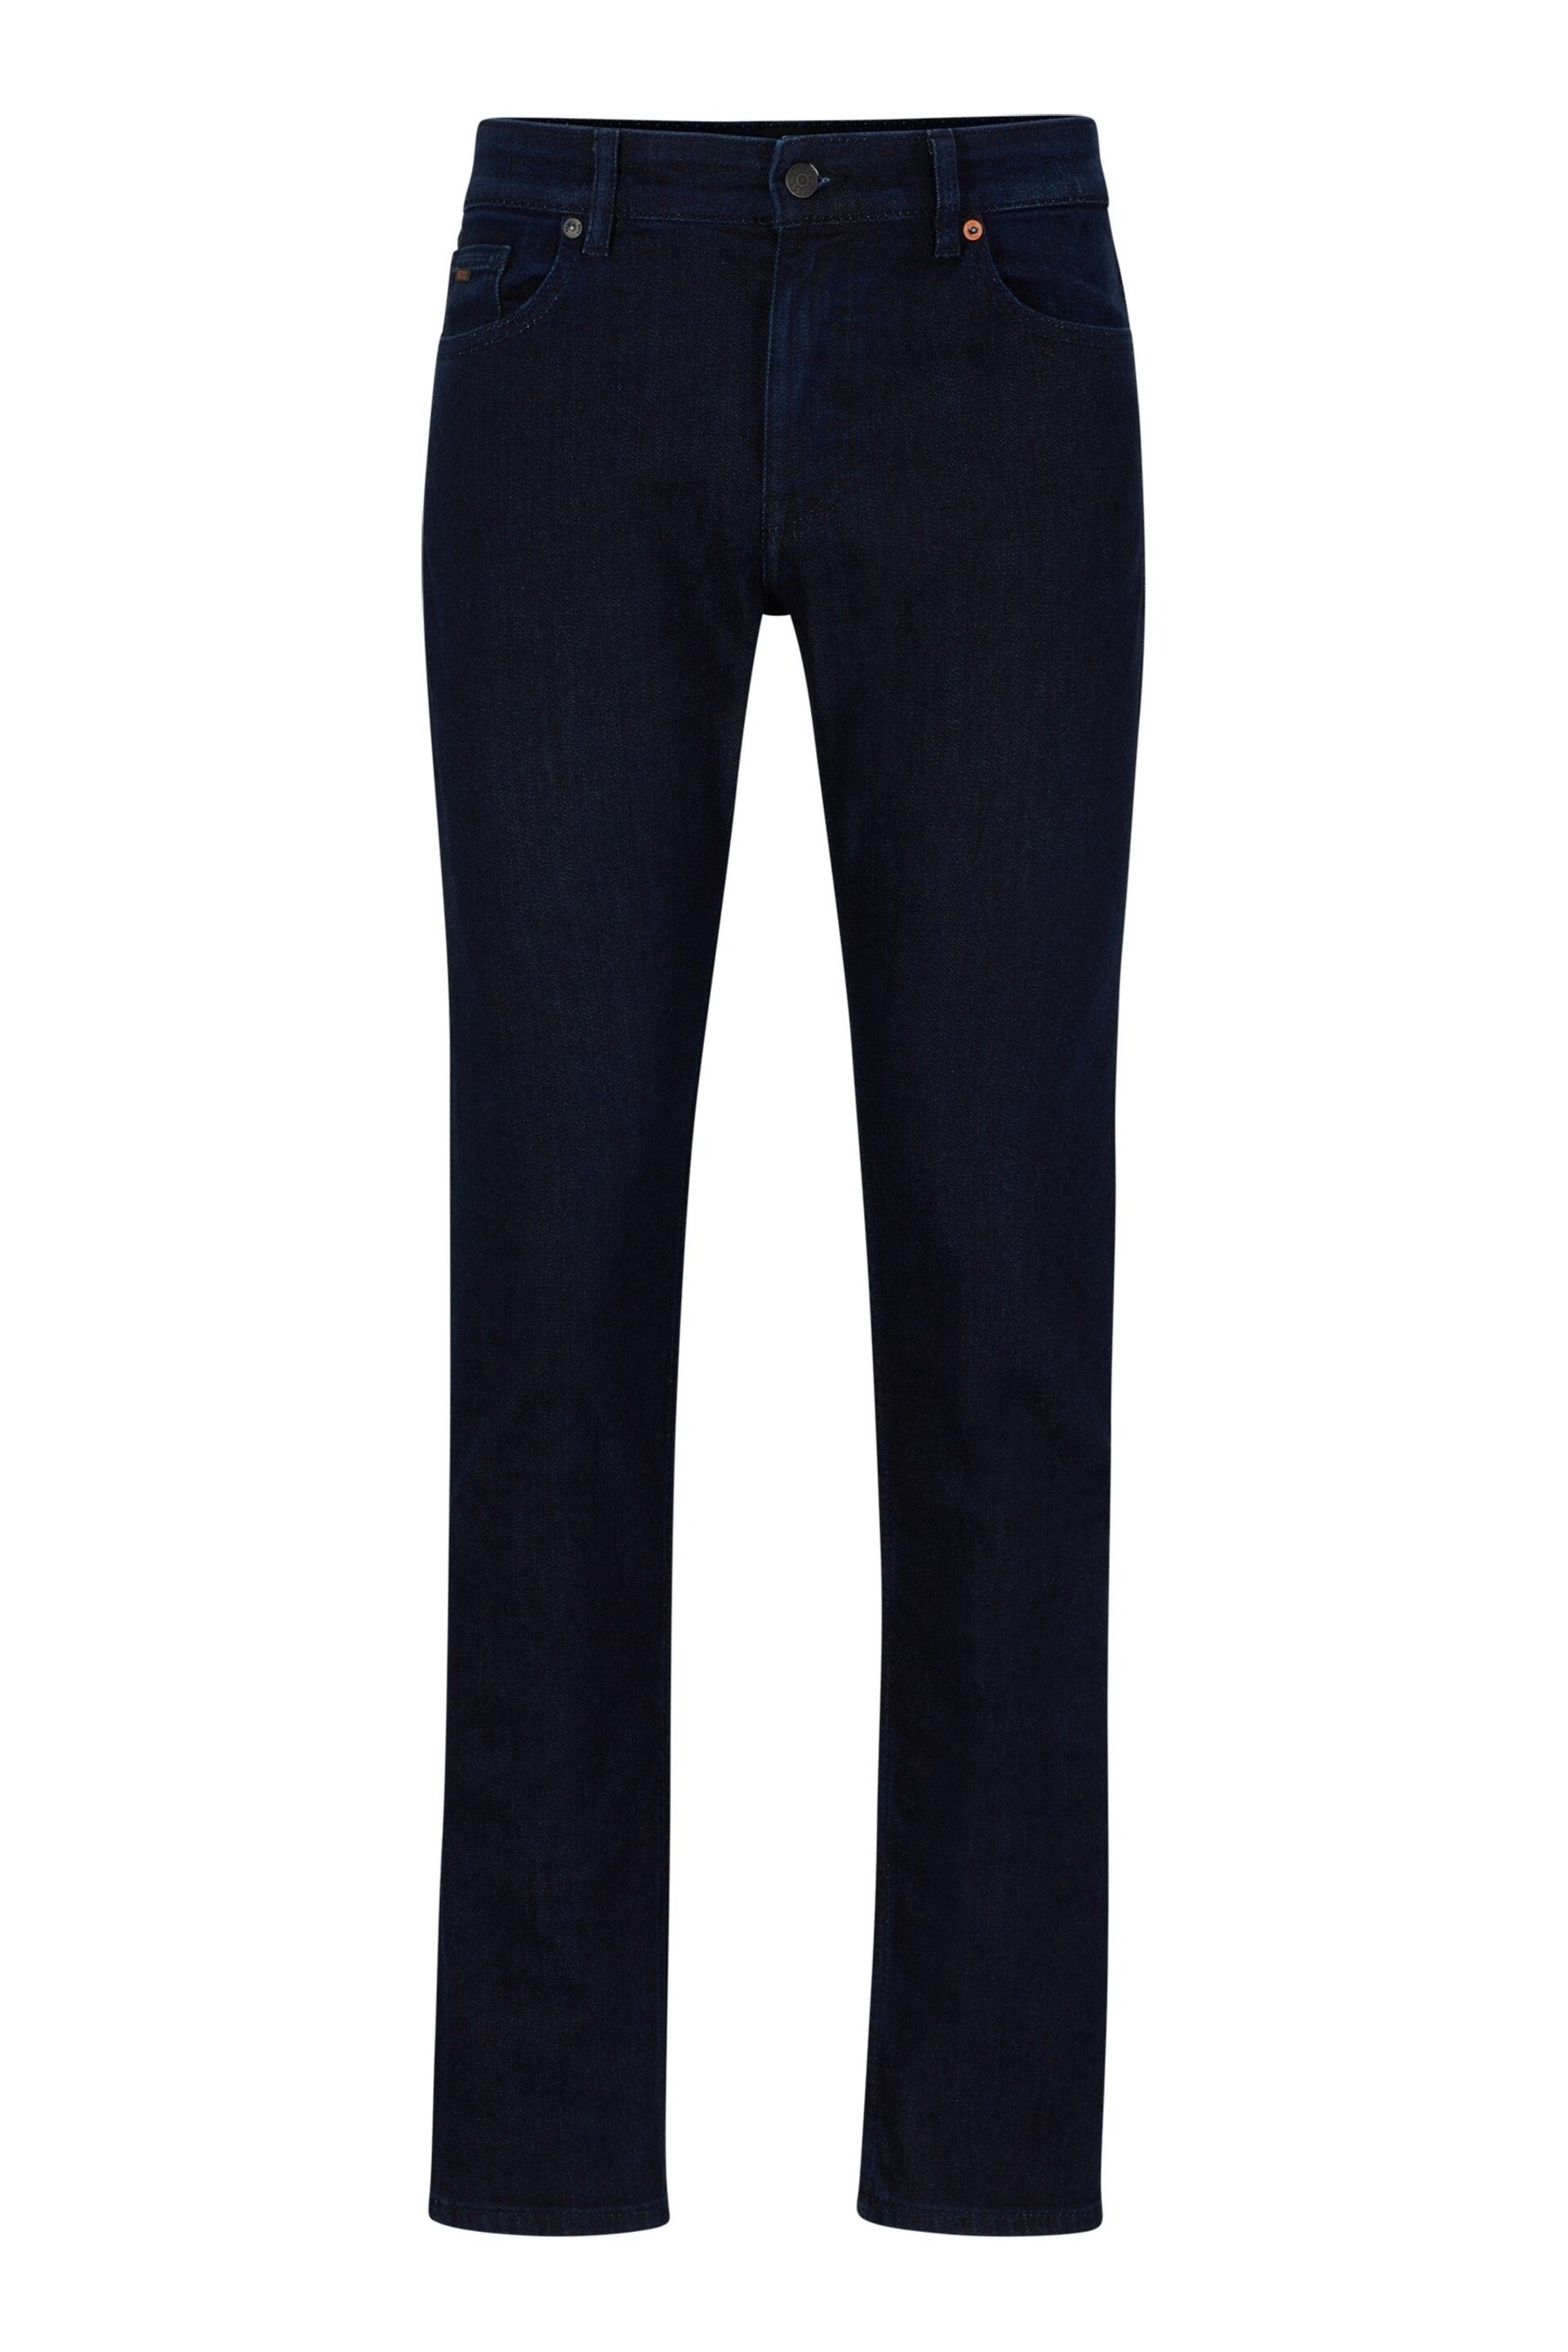 BOSS Dark Blue Delaware Slim Fit Stretch Jeans - Image 5 of 5